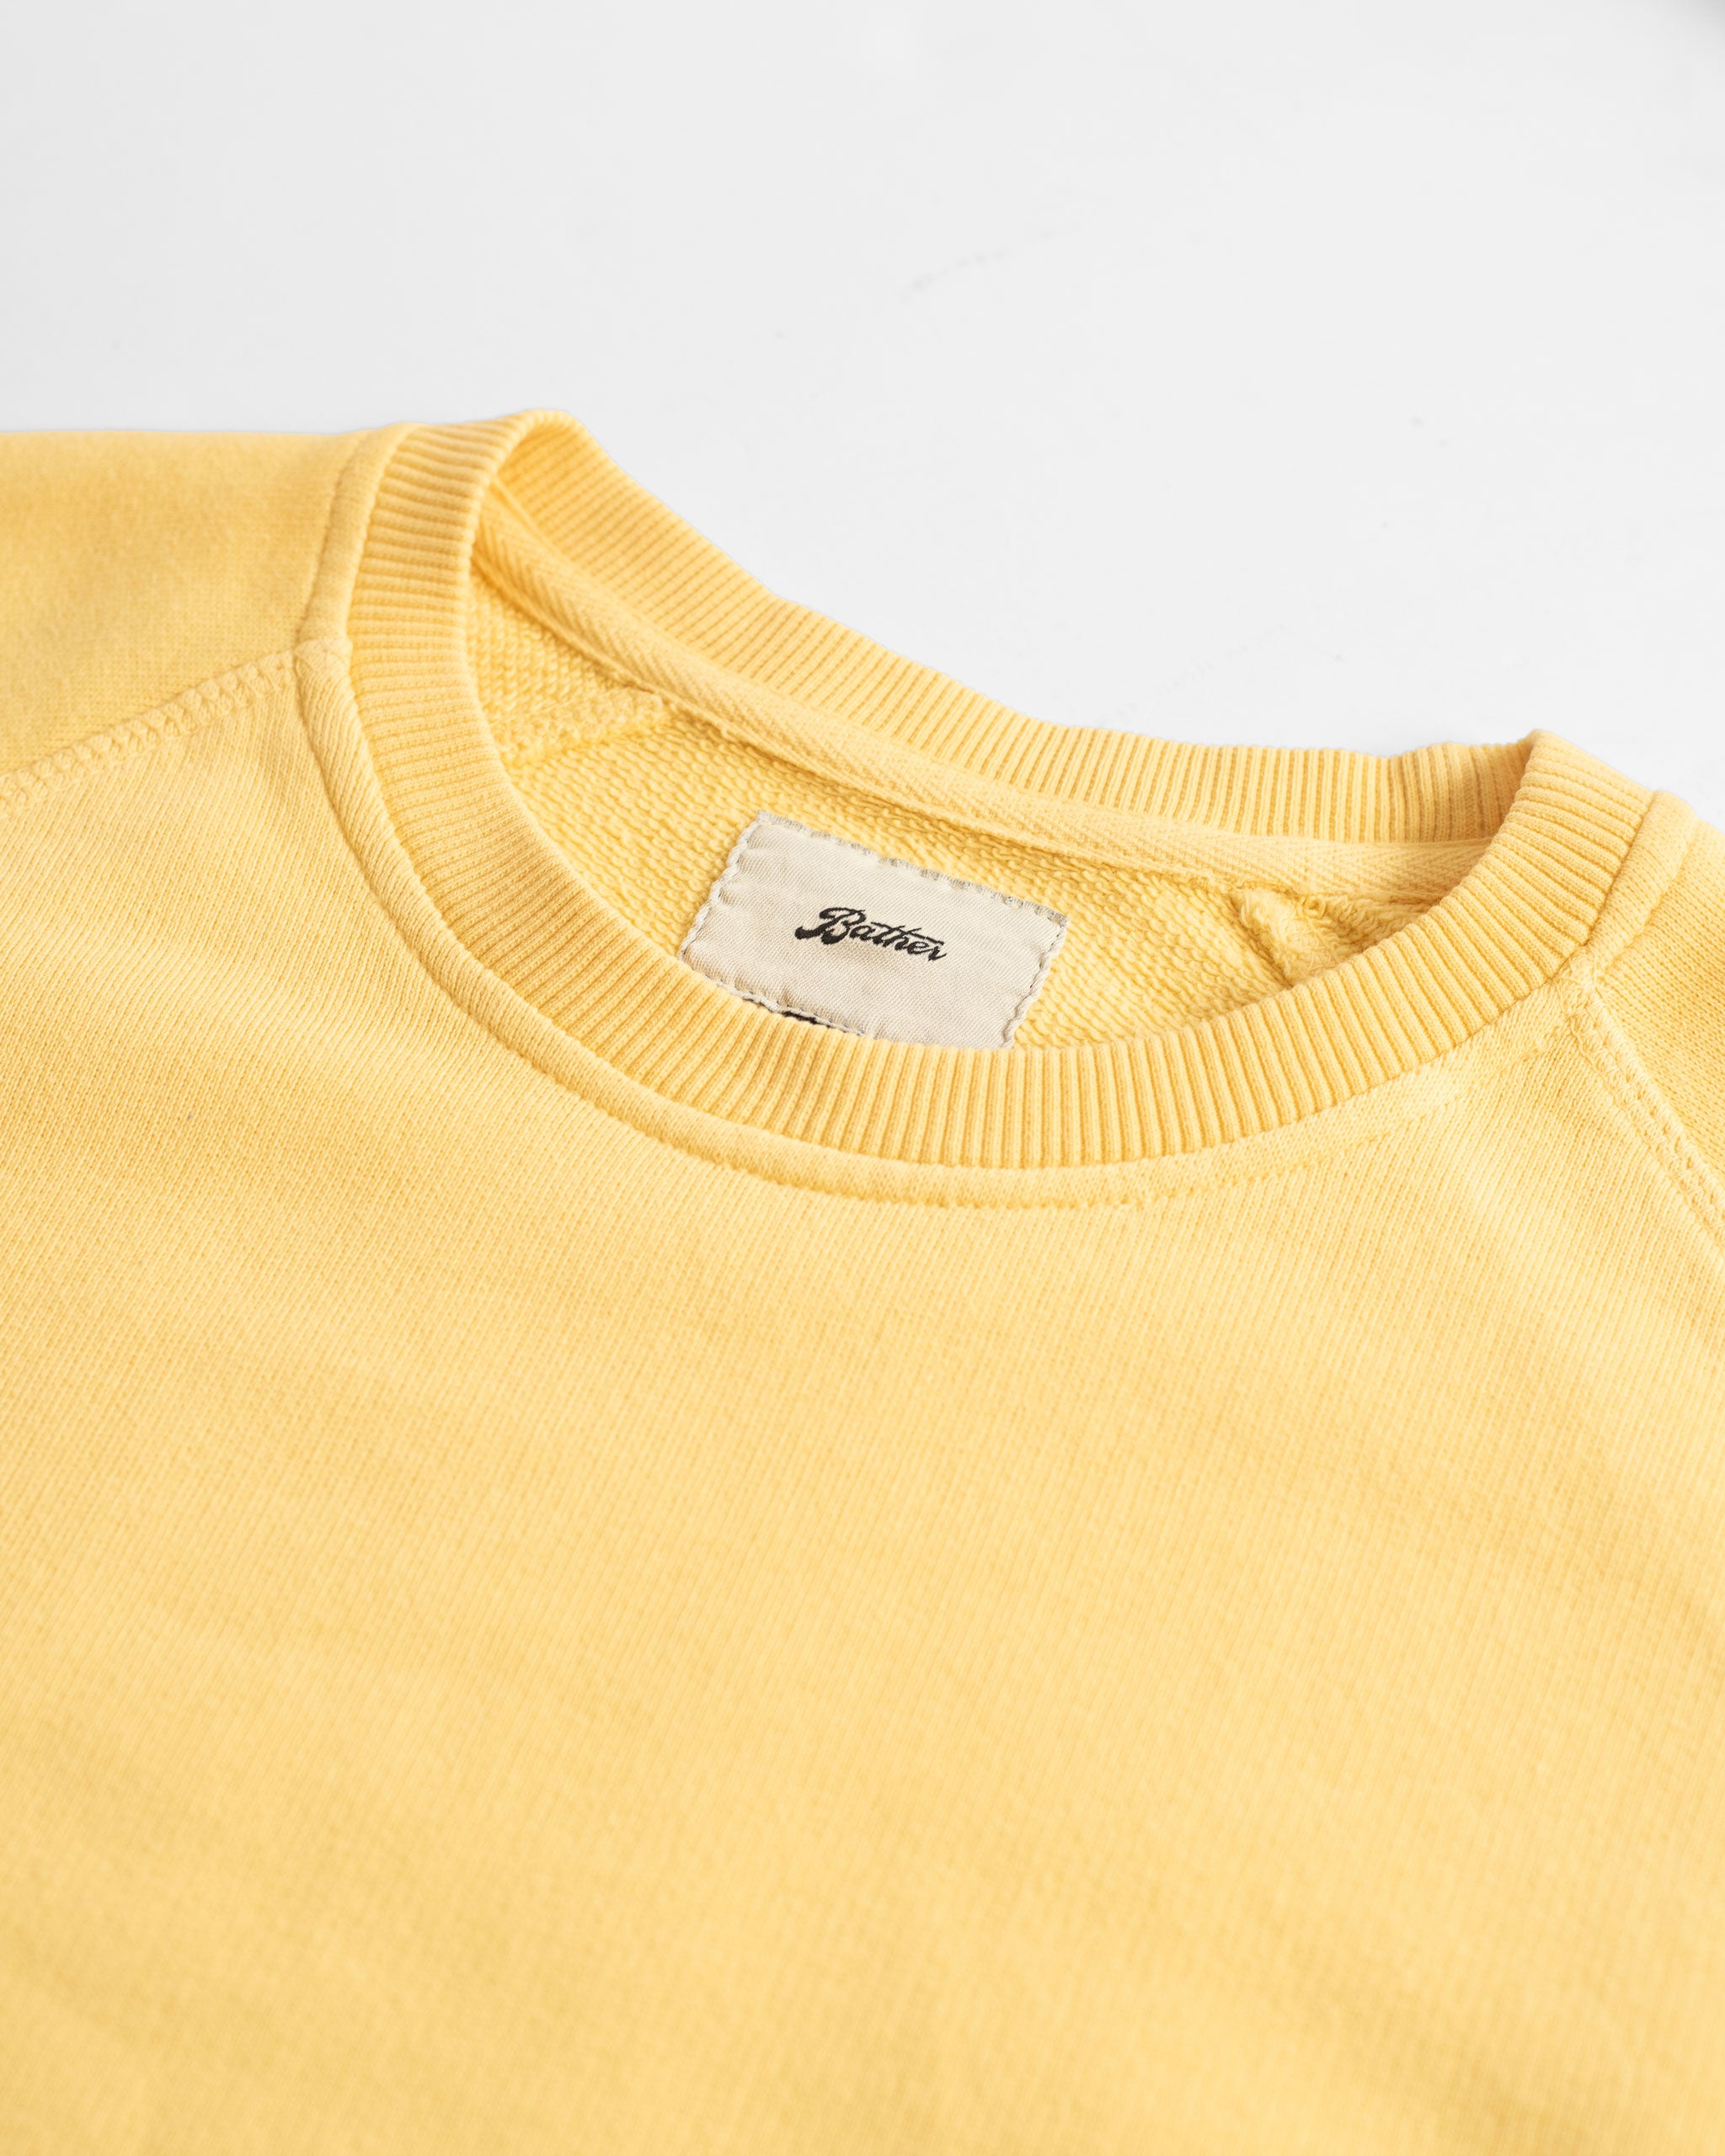 Collar close up shot of Canary yellow french terry raglan sleeve crewneck sweatshirt